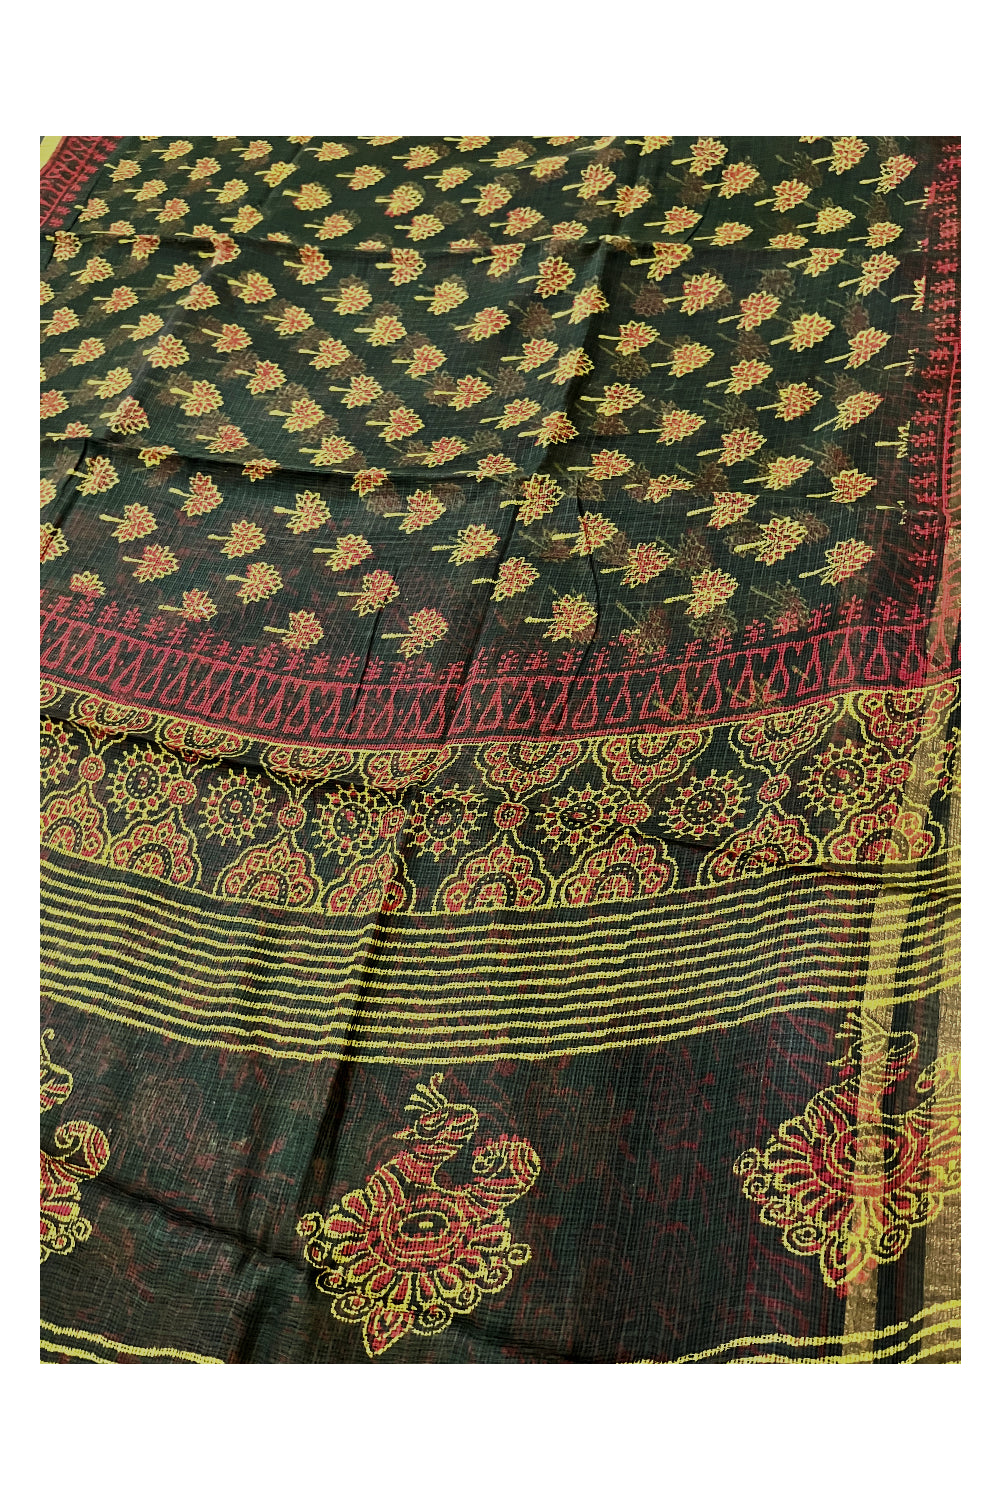 Southloom Kota Fabric Floral Printed Dark Green Saree